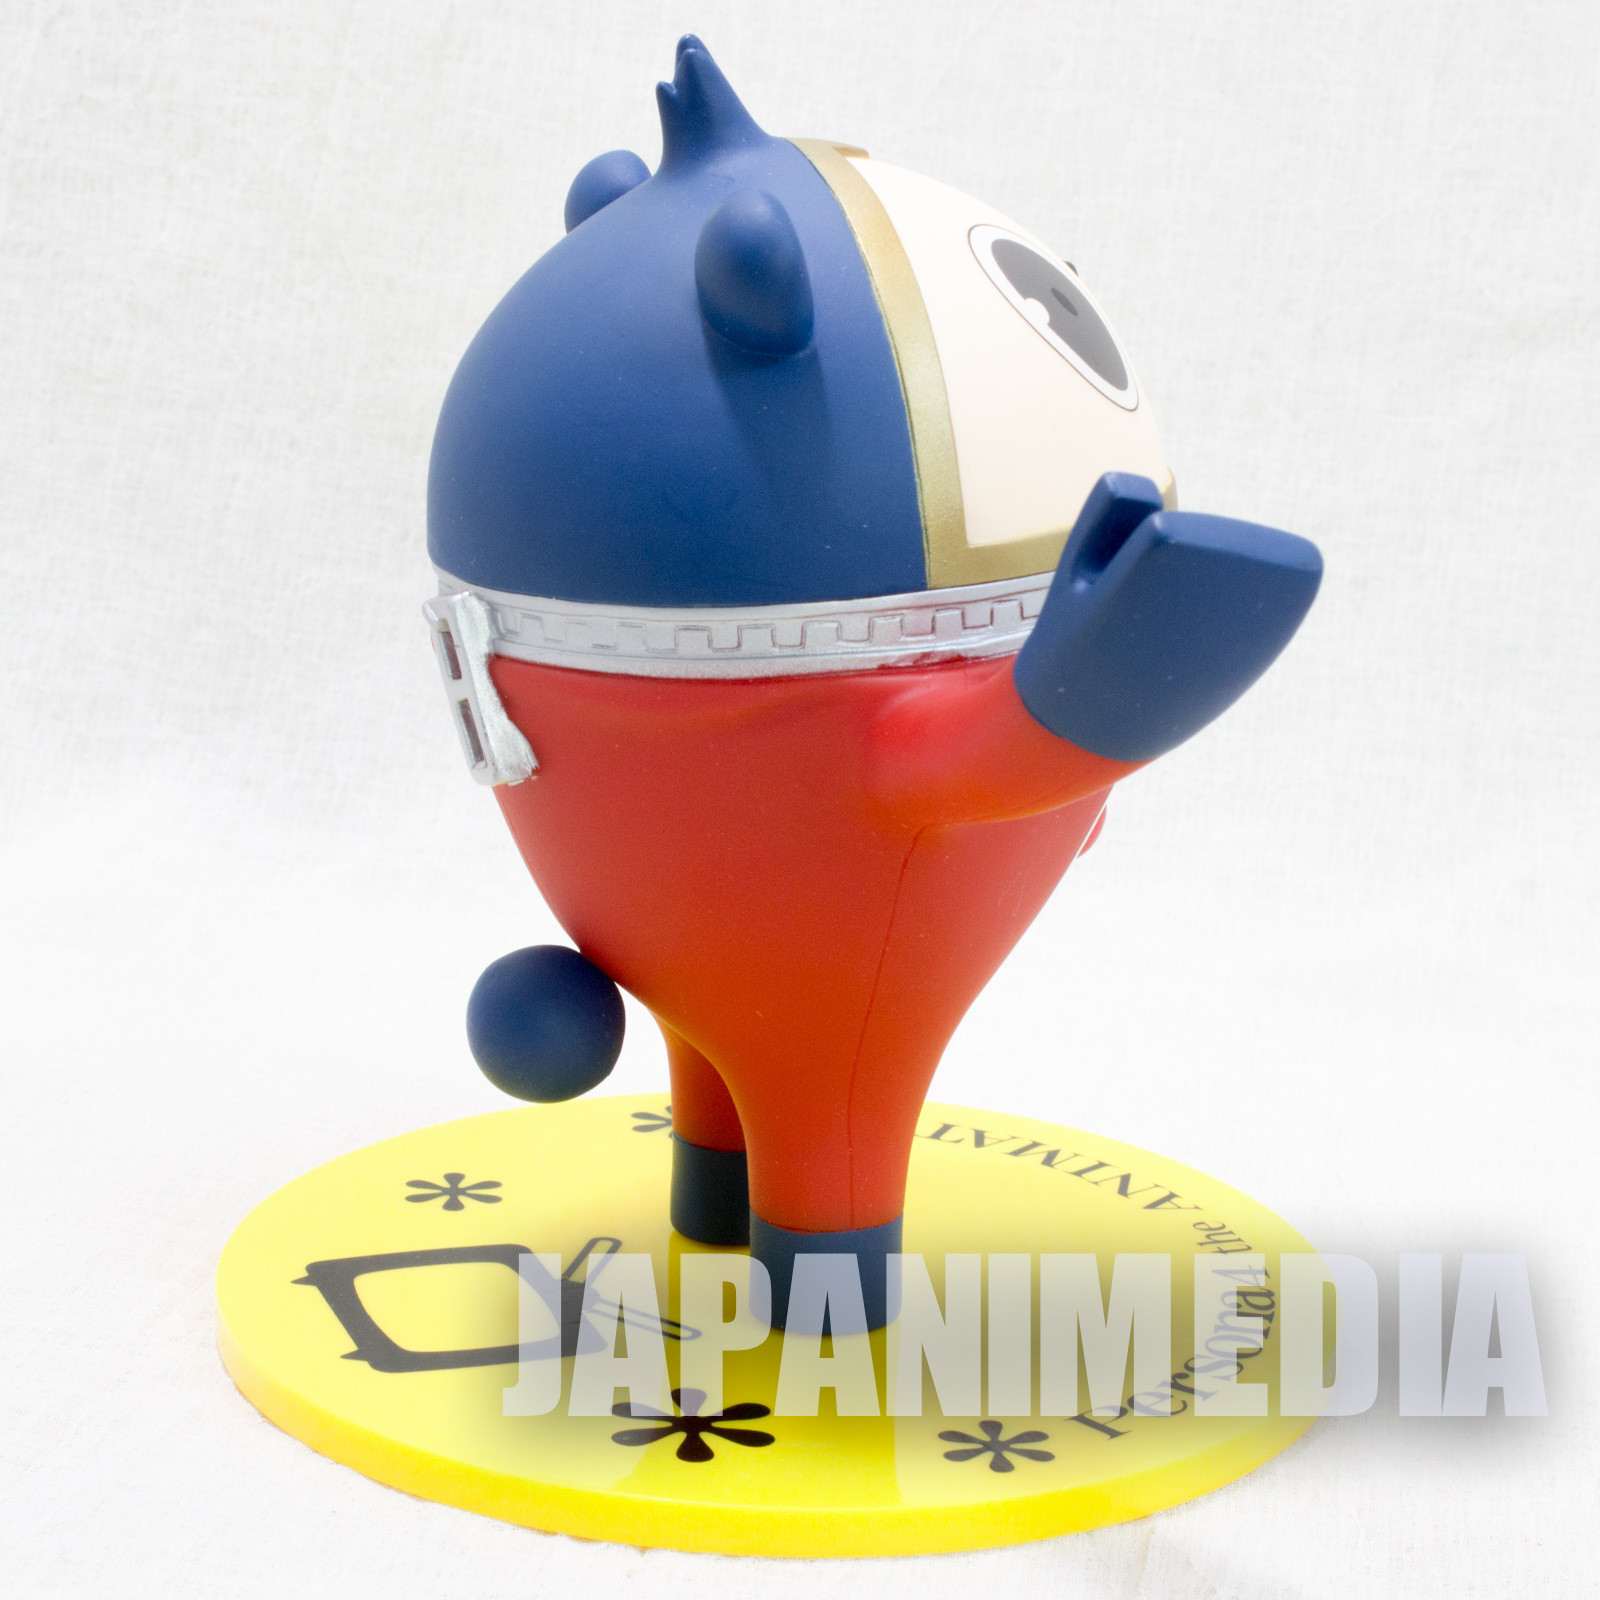 P4 Persona 4 the Animation Kuma Figure Glasses Stand Figure [Prize D] JAPAN